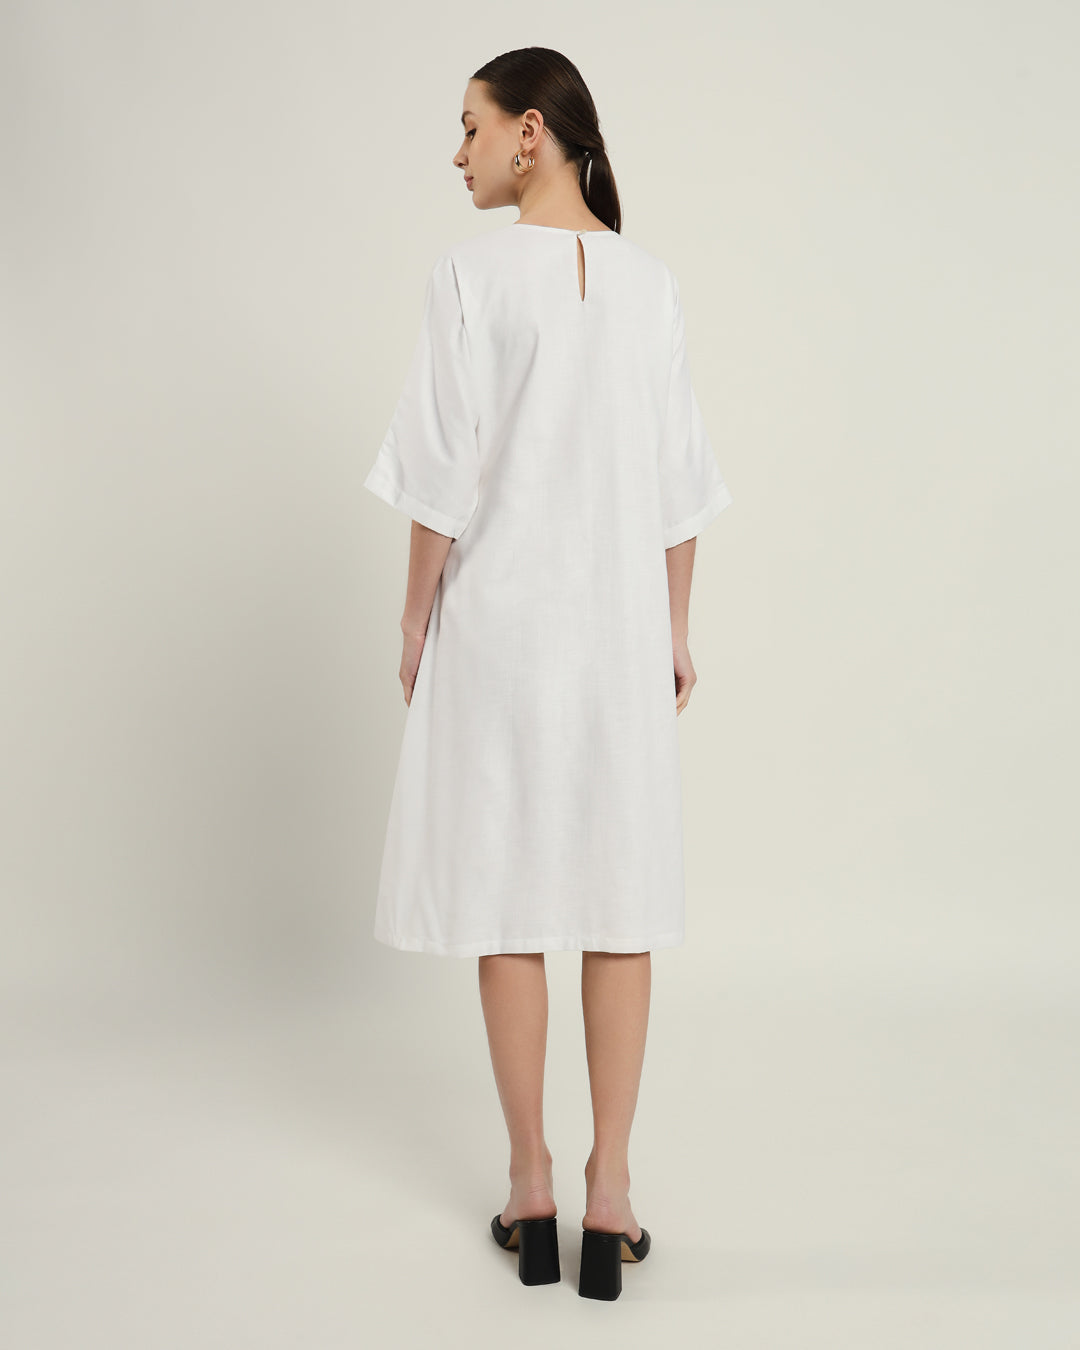 The Monrovia Daisy White Linen Dress